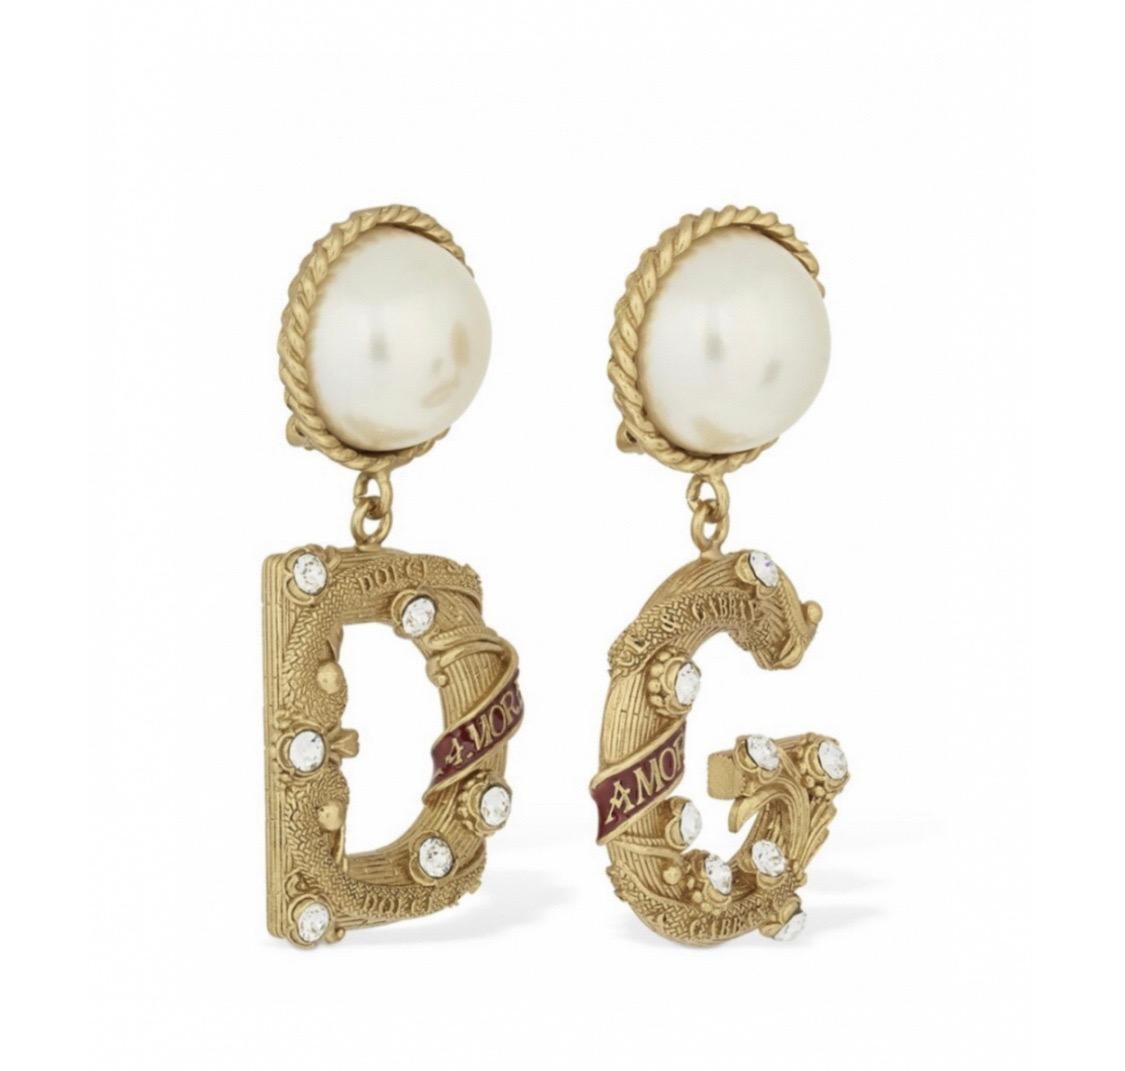 Modern Dolce & Gabbana Pearls Logo Amore
clip on earrings